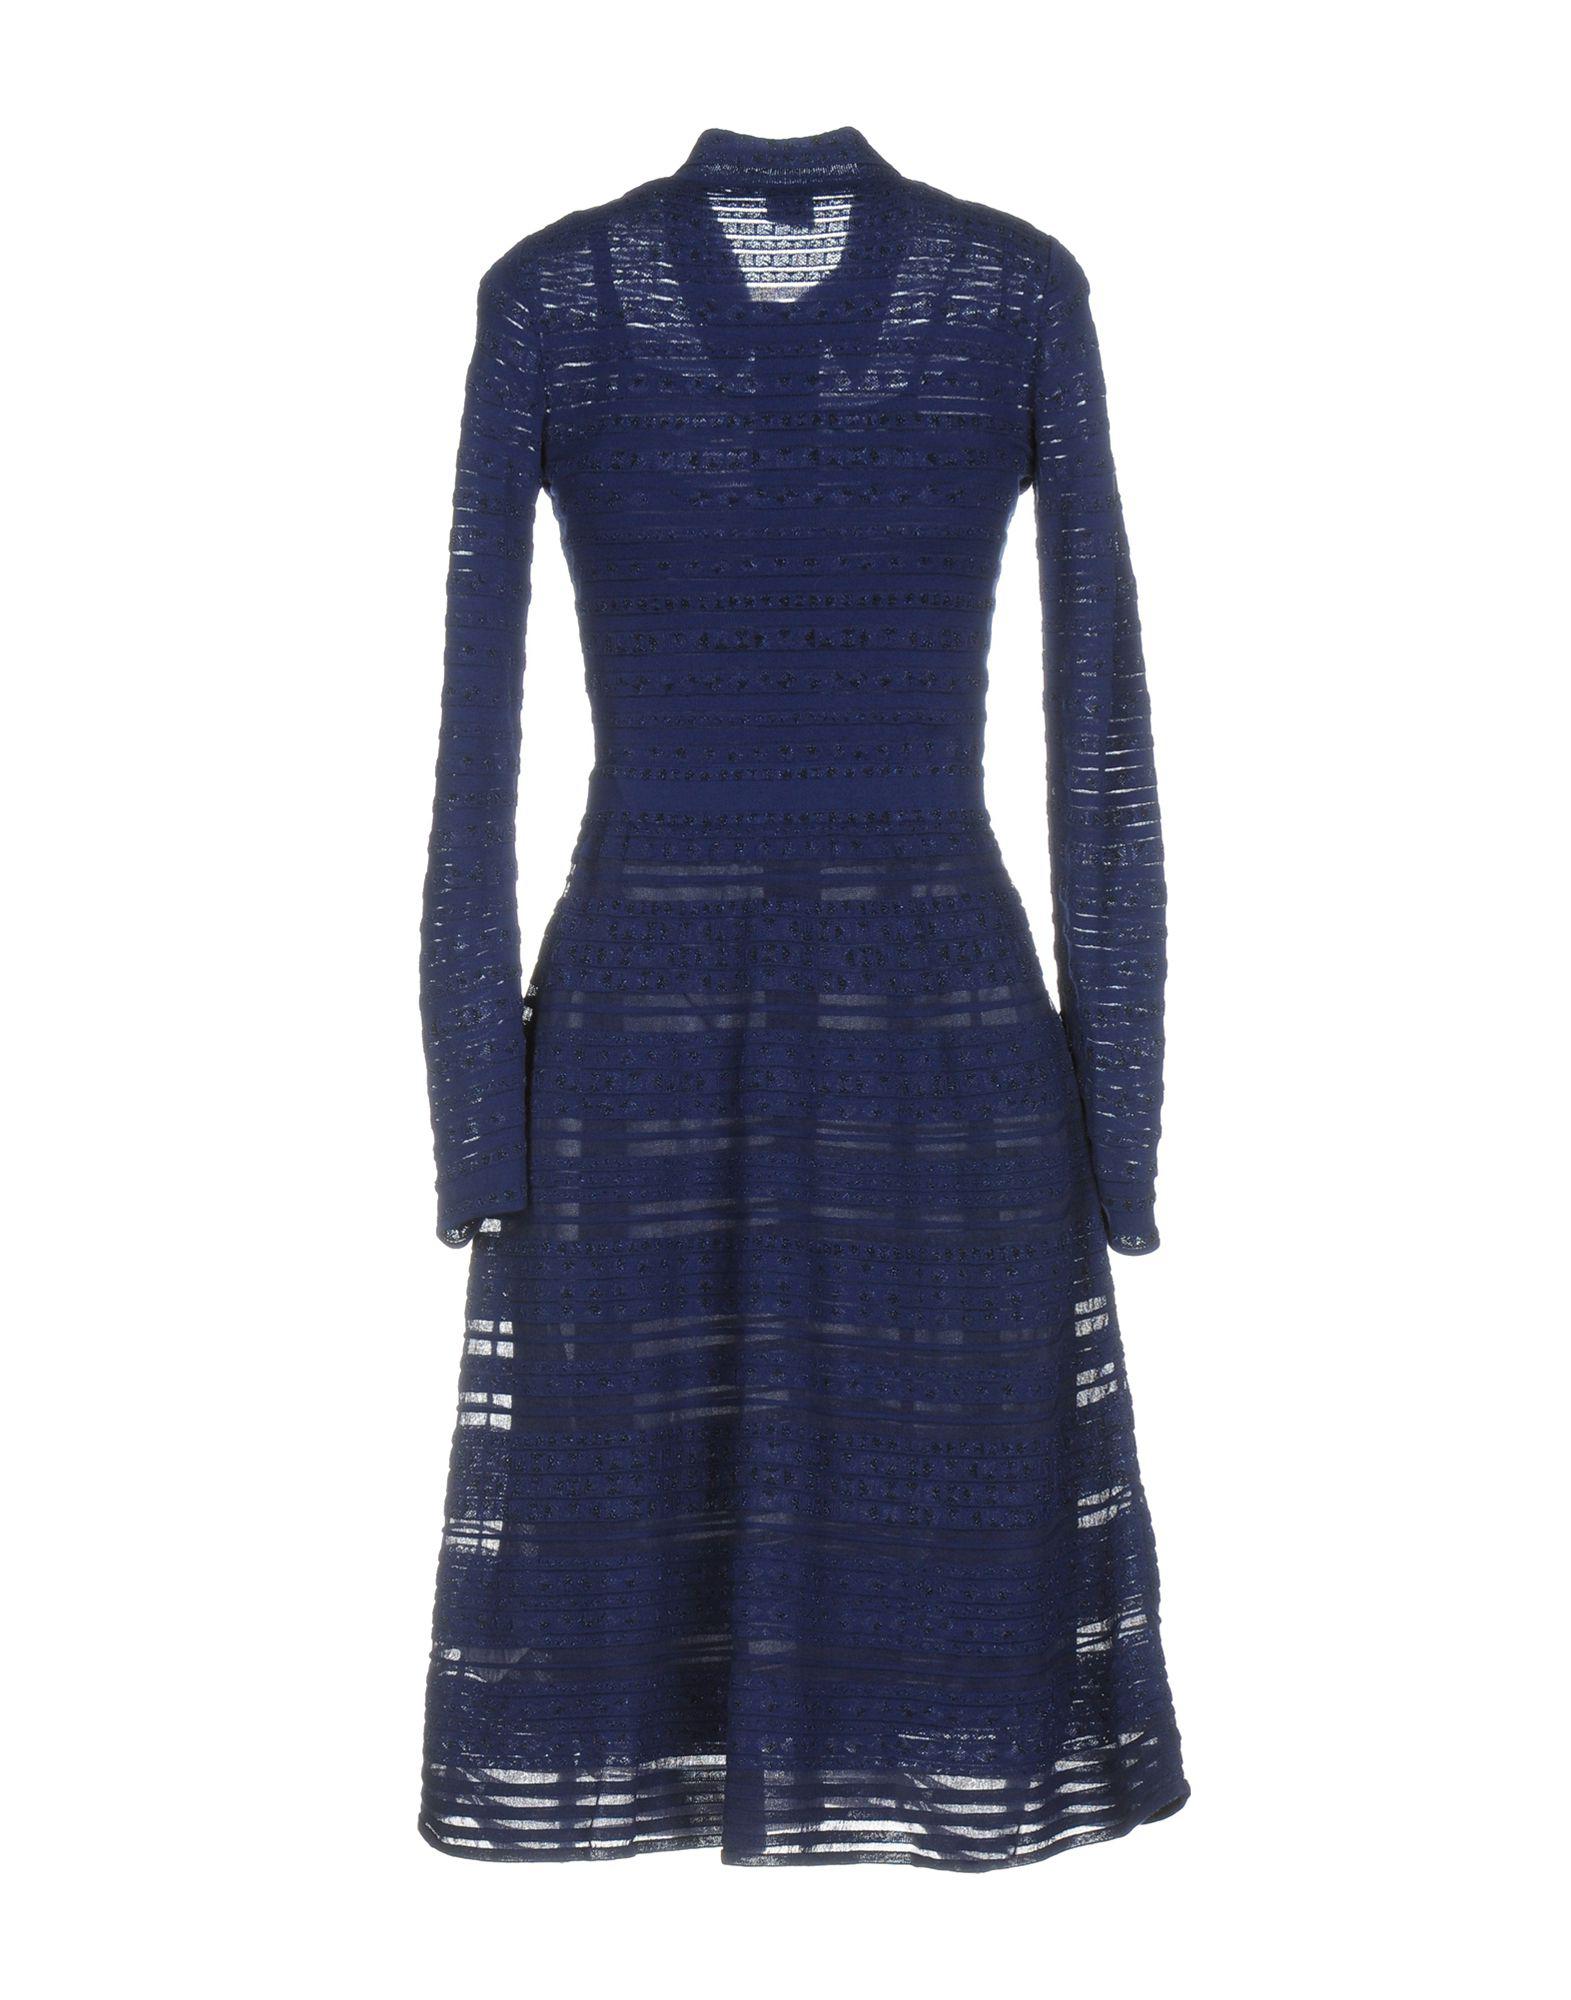 M Missoni Synthetic Knee-length Dress in Dark Blue (Blue) - Lyst